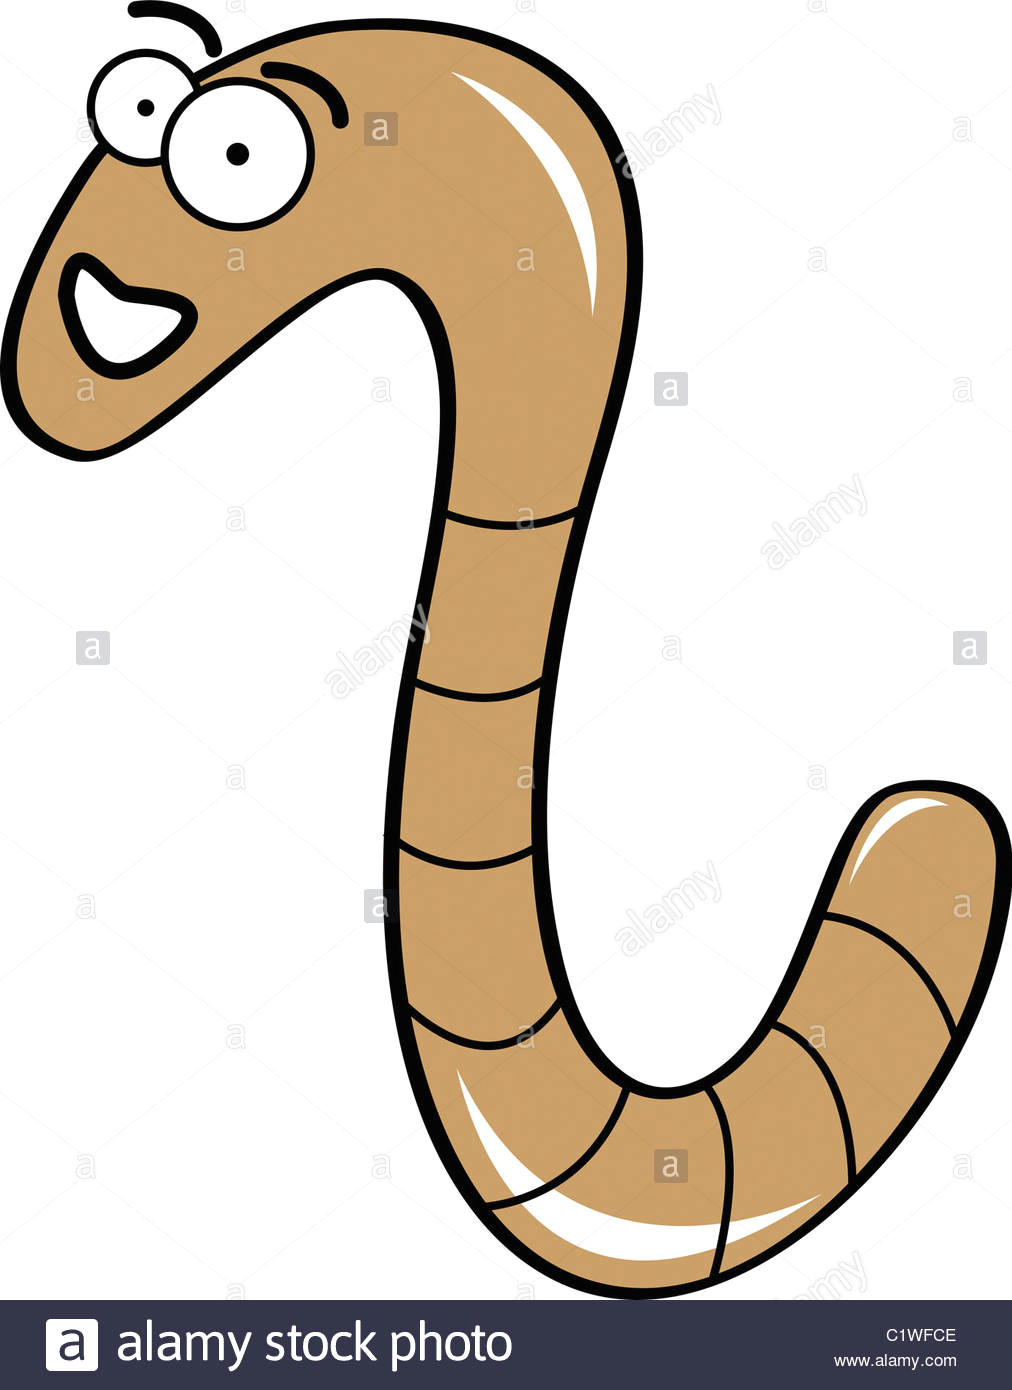 earthworm cartoon isolated on white stock image